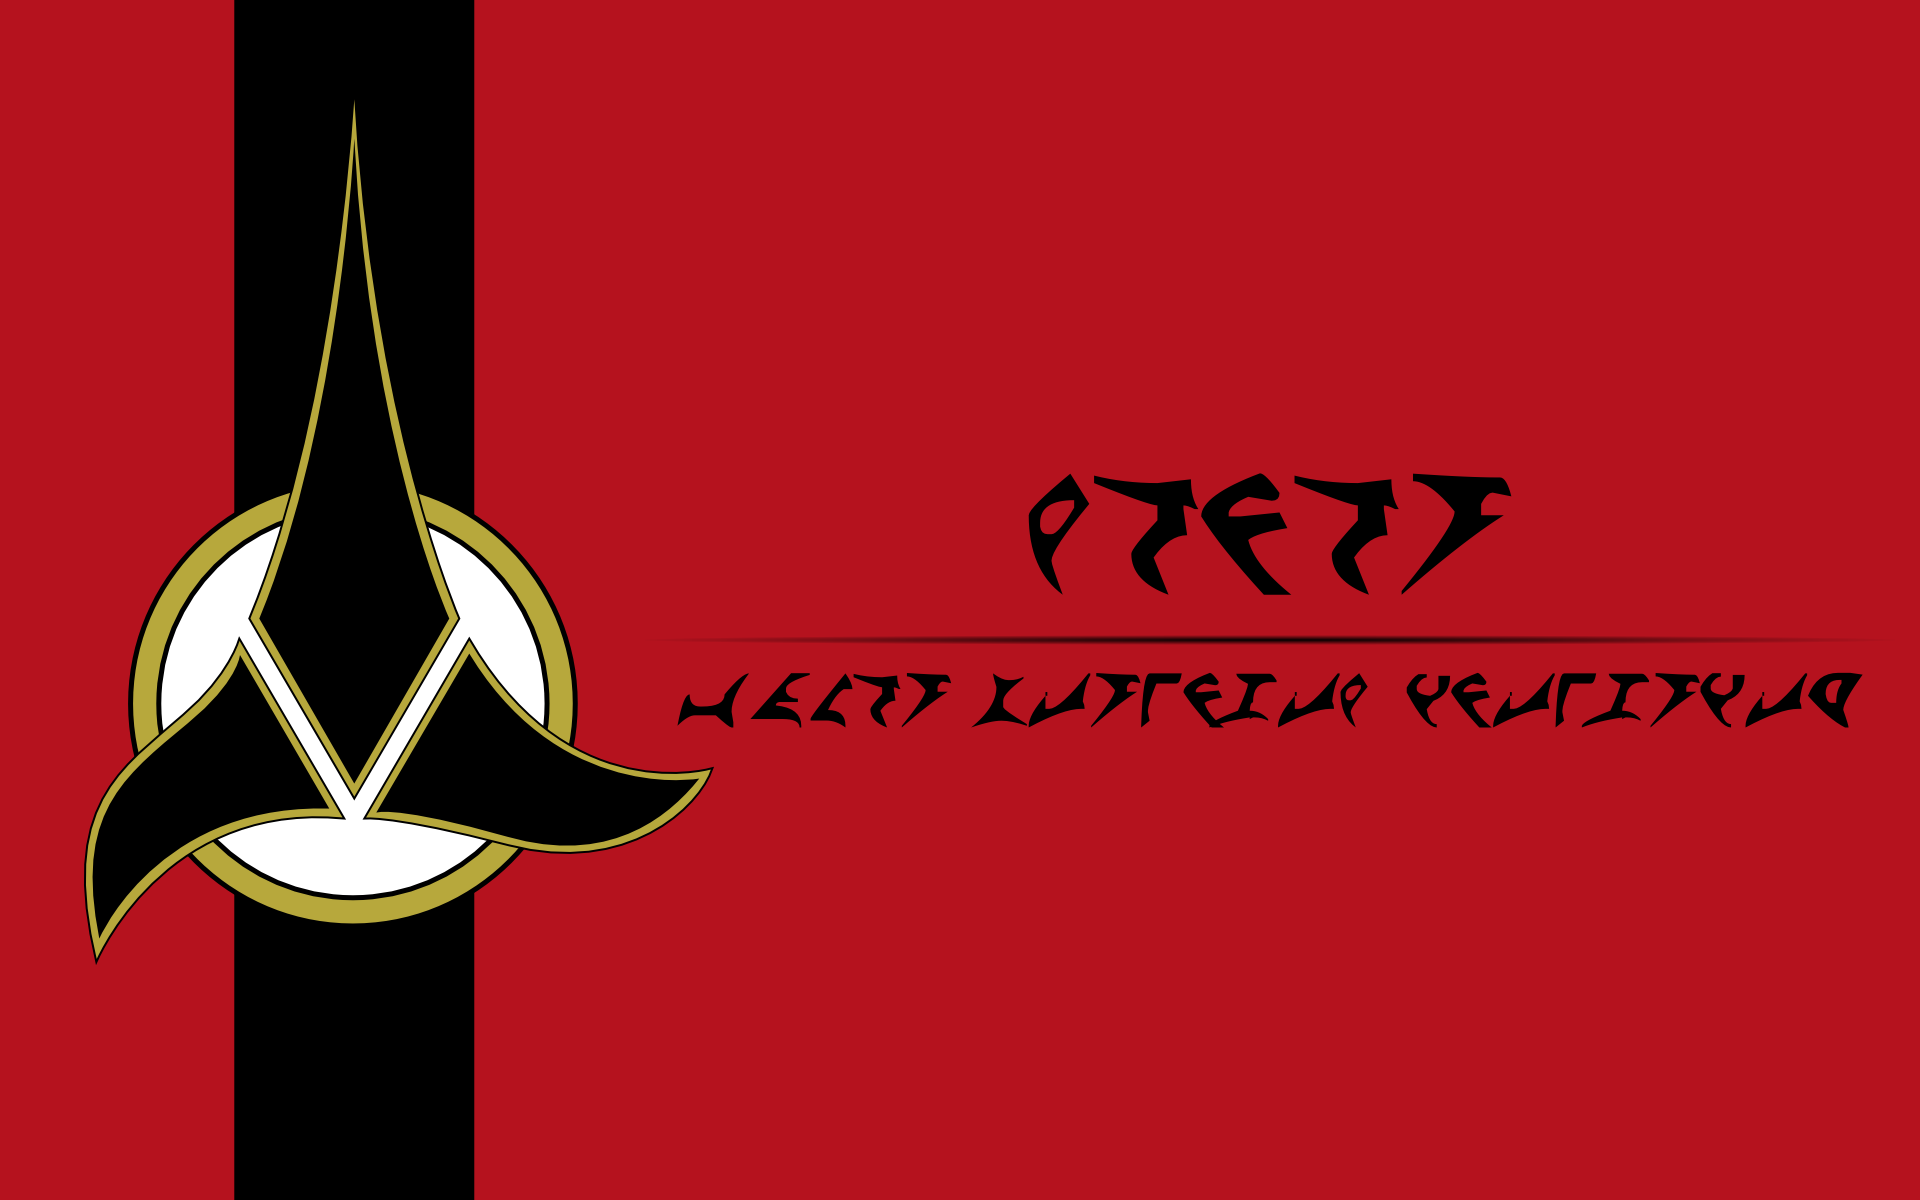 General 1920x1200 Klingon digital art Star Trek vector art minimalism science fiction red background simple background